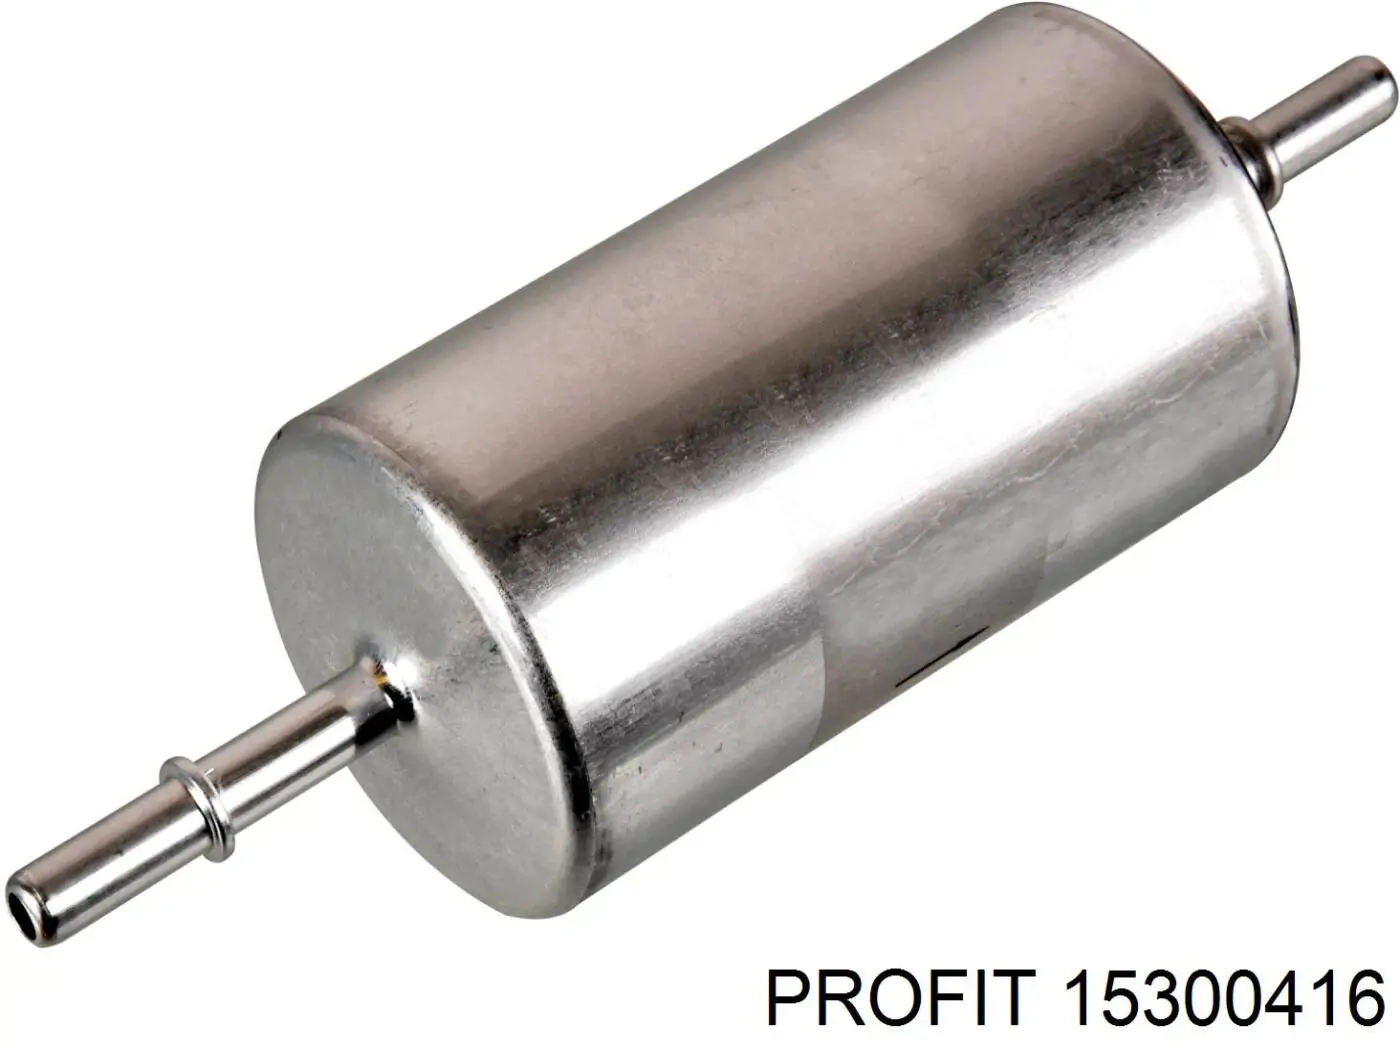 15300416 Profit filtro combustible